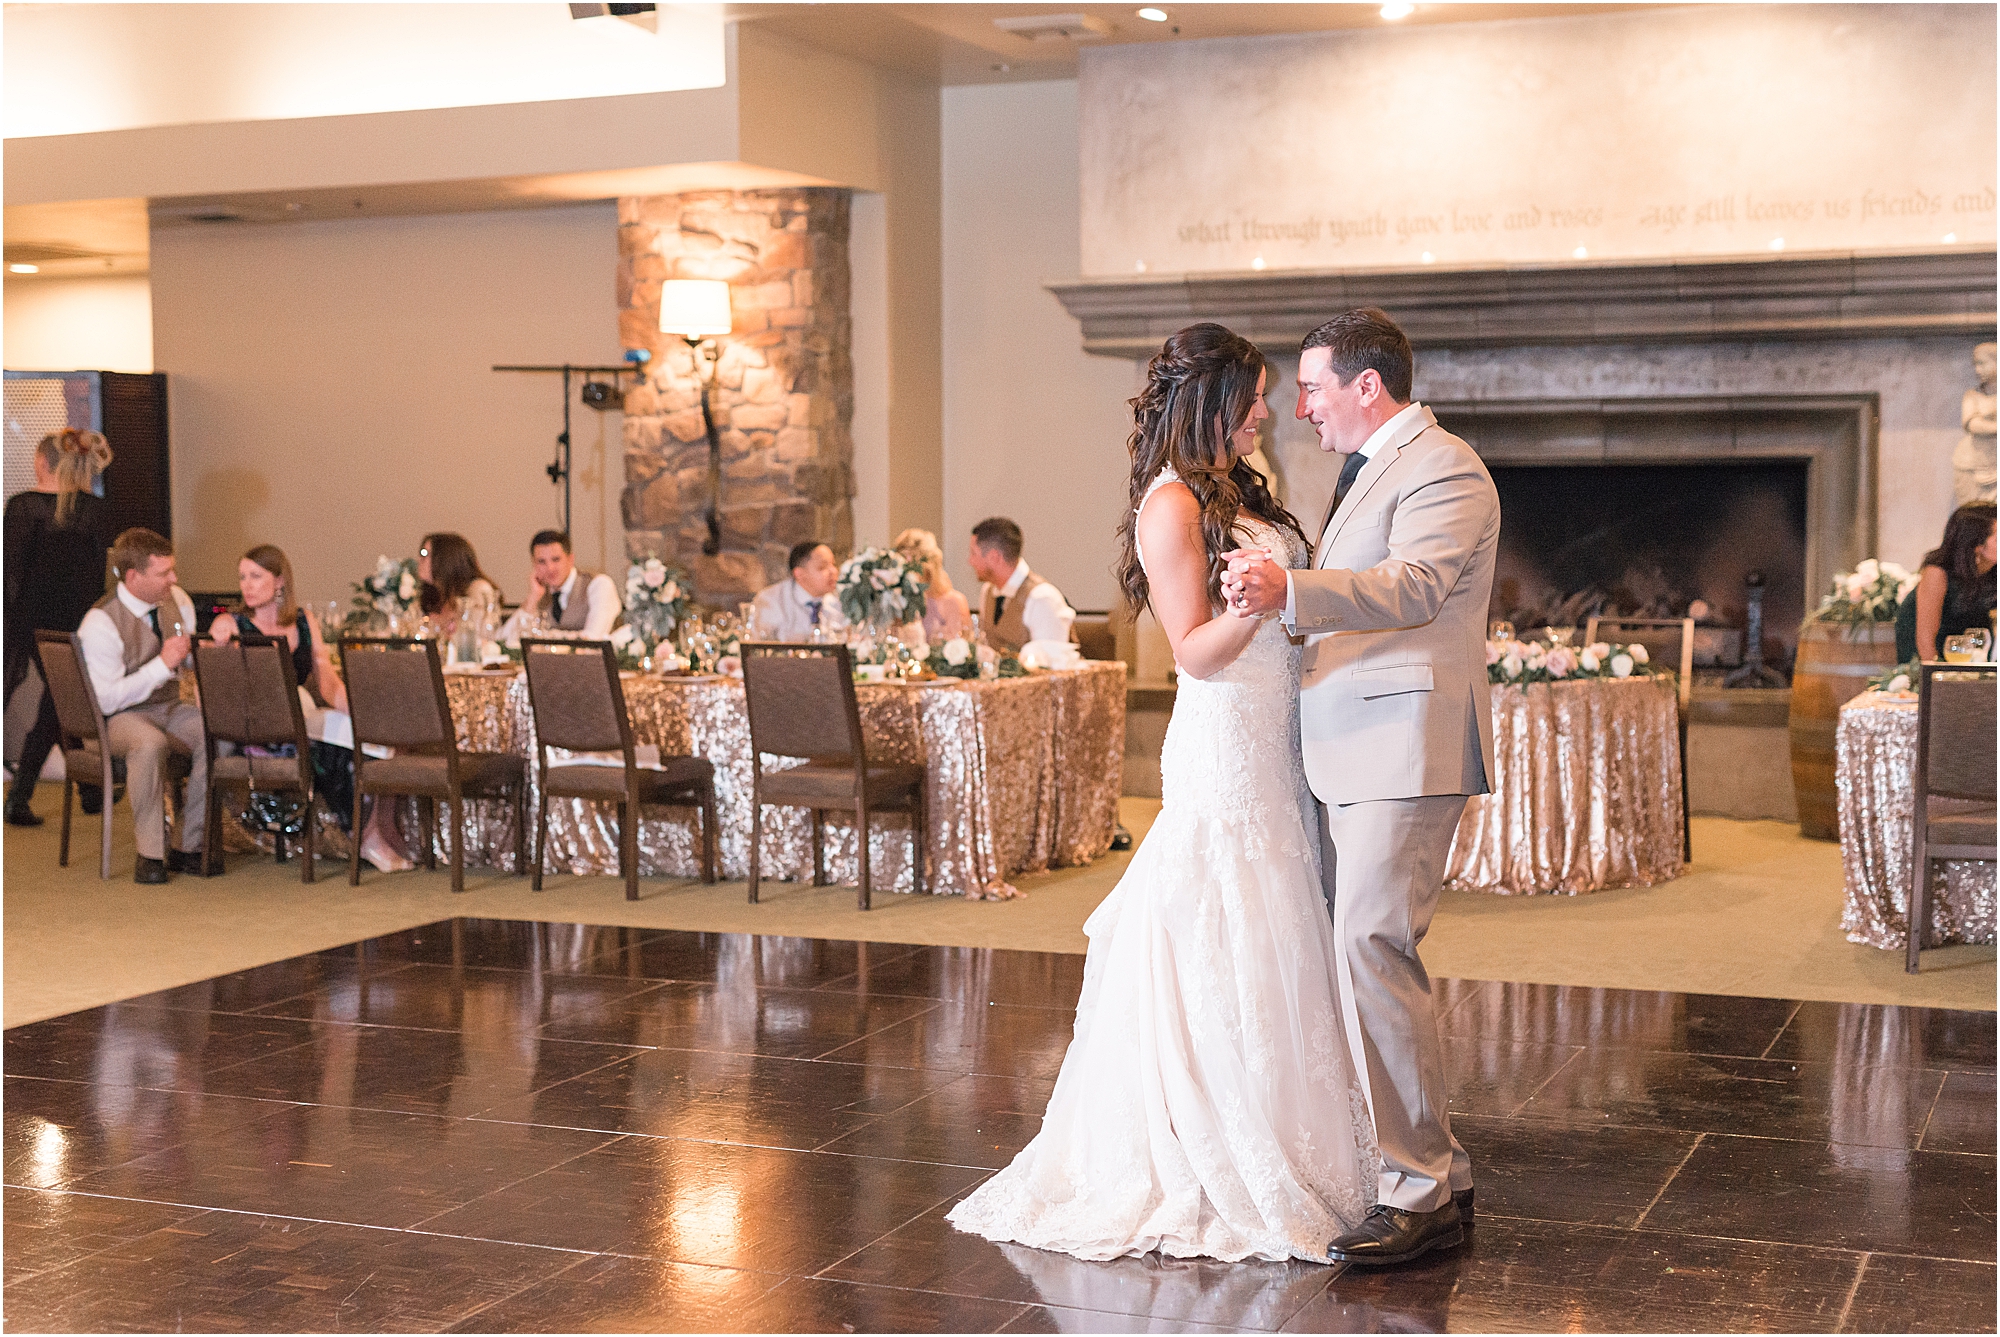 A couples first dance in a lodi wedding venue 